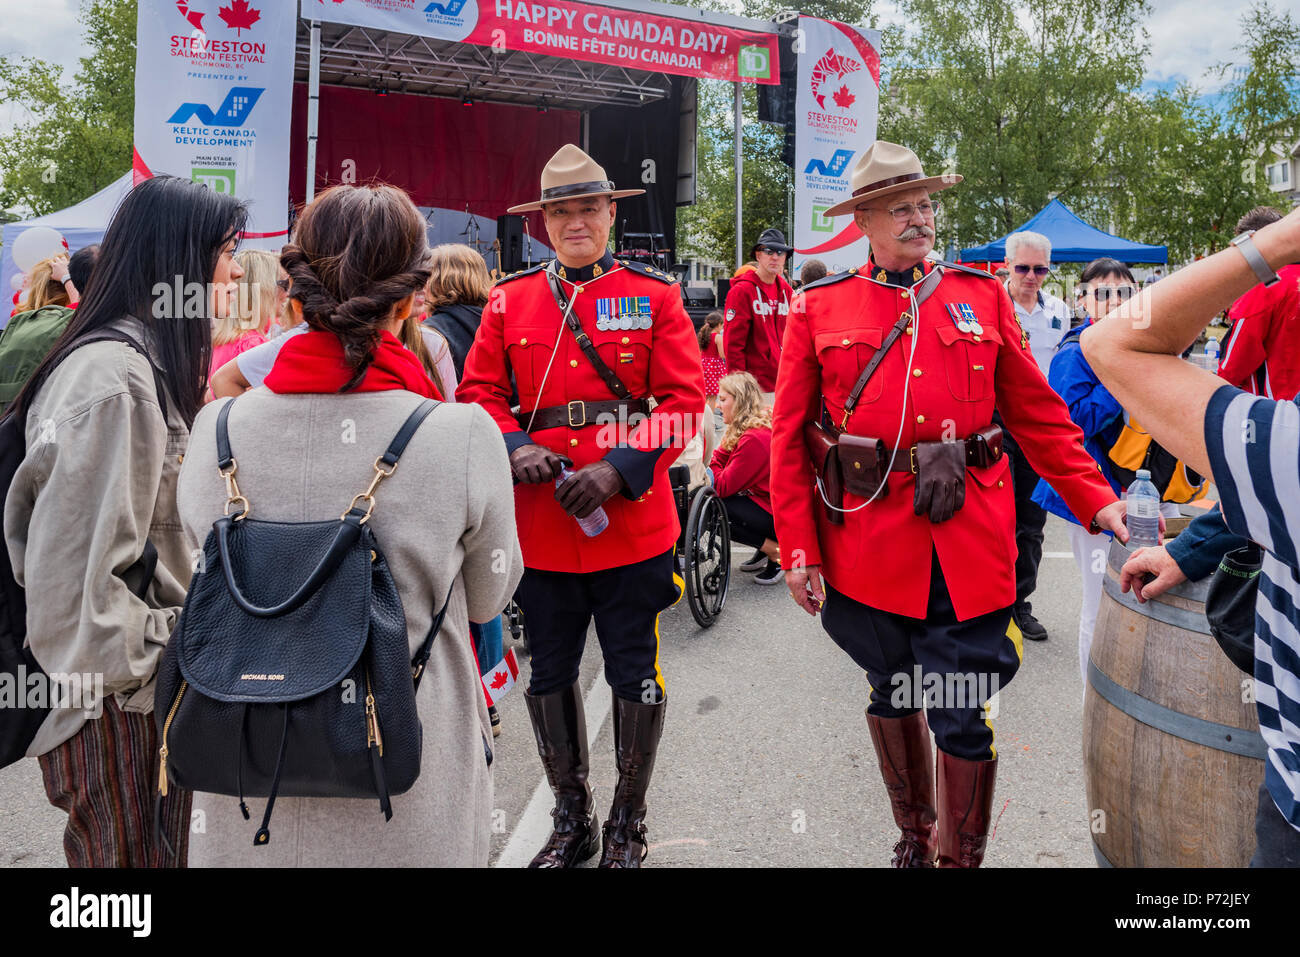 Mounties in red serge uniforms, Canada Day,  Steveston, Richmond, British Columbia, Canada. Stock Photo